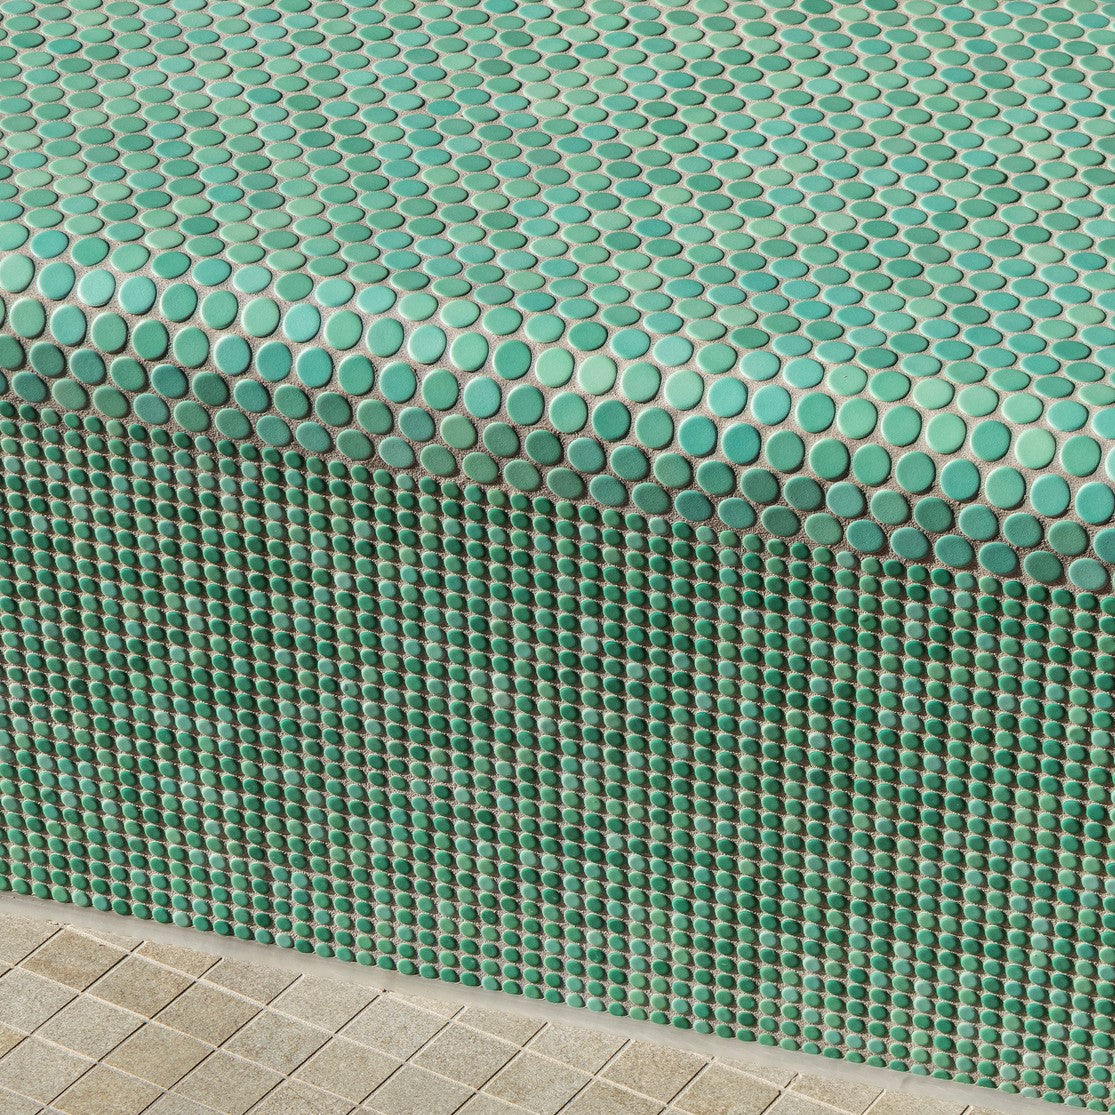 Modwalls PopDotz Porcelain Penny Round Tile | Spearmint | Colorful Modern & Midcentury tile for bathrooms, kitchens, backsplashes, showers, floors, pools & outdoors. 